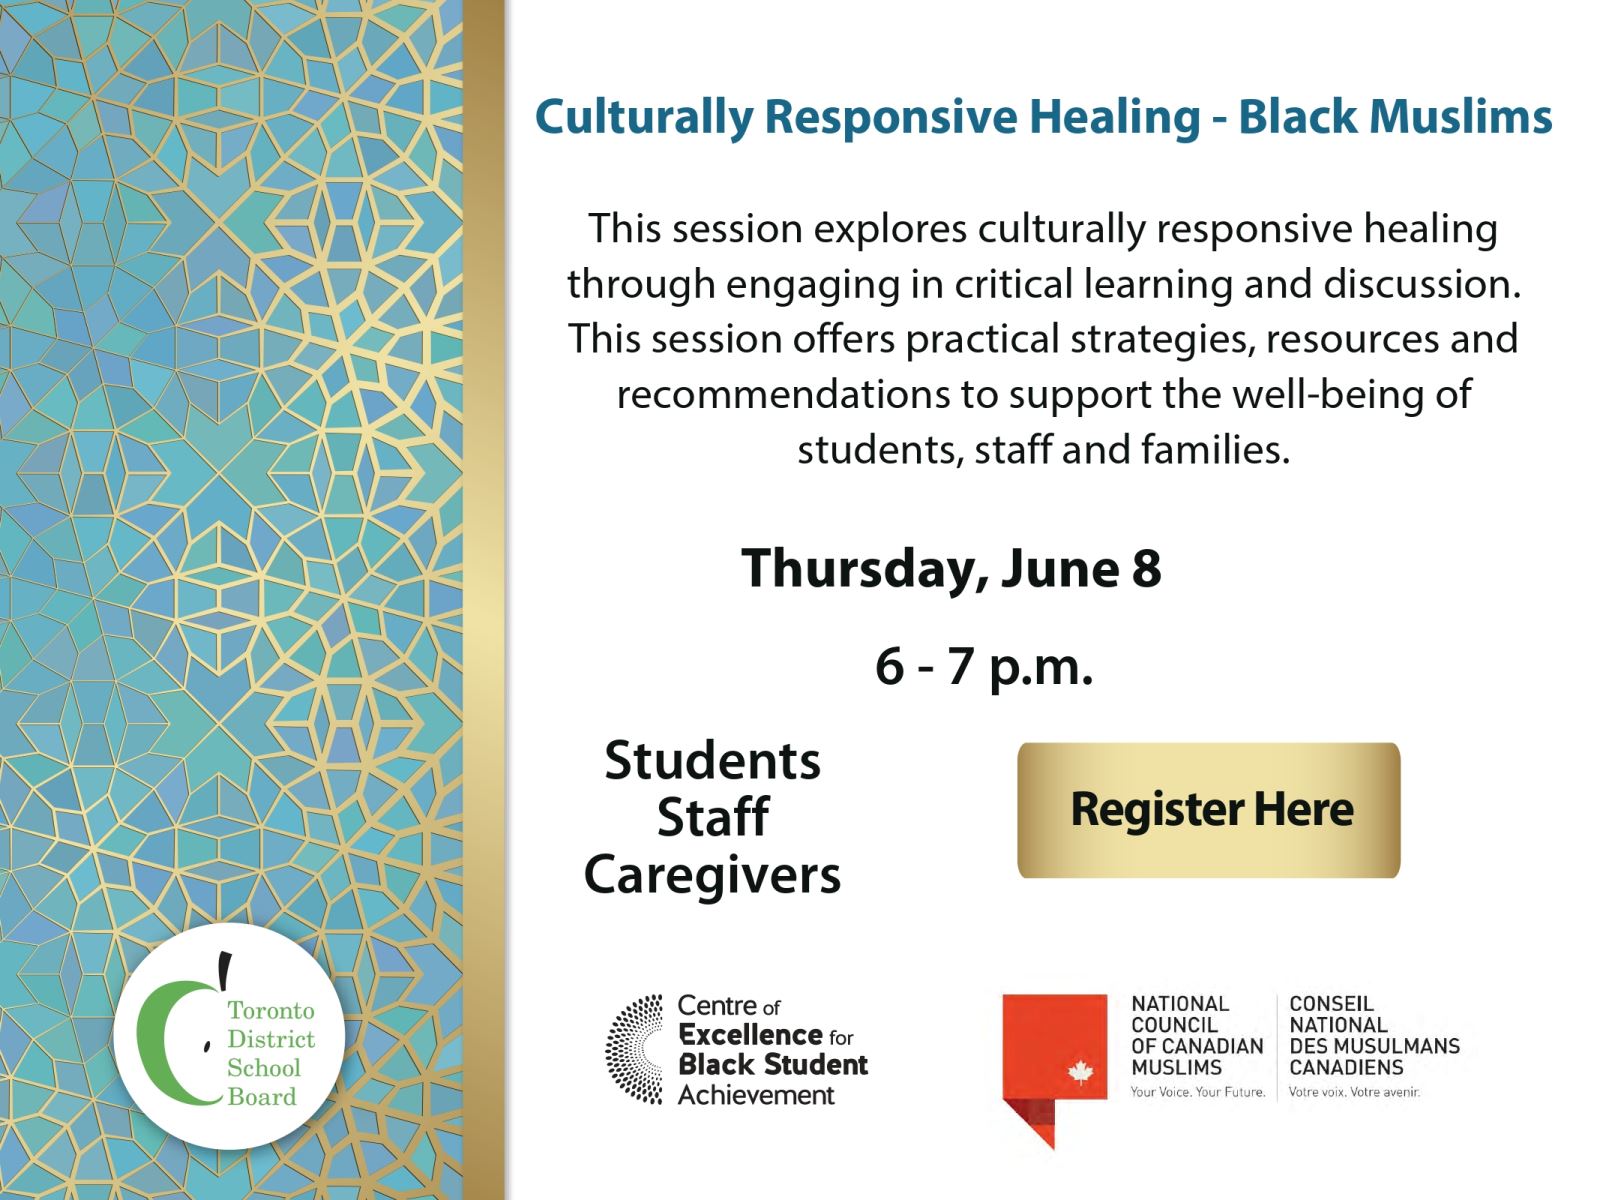 NCCM Culturally Responsive Healing Black Muslims